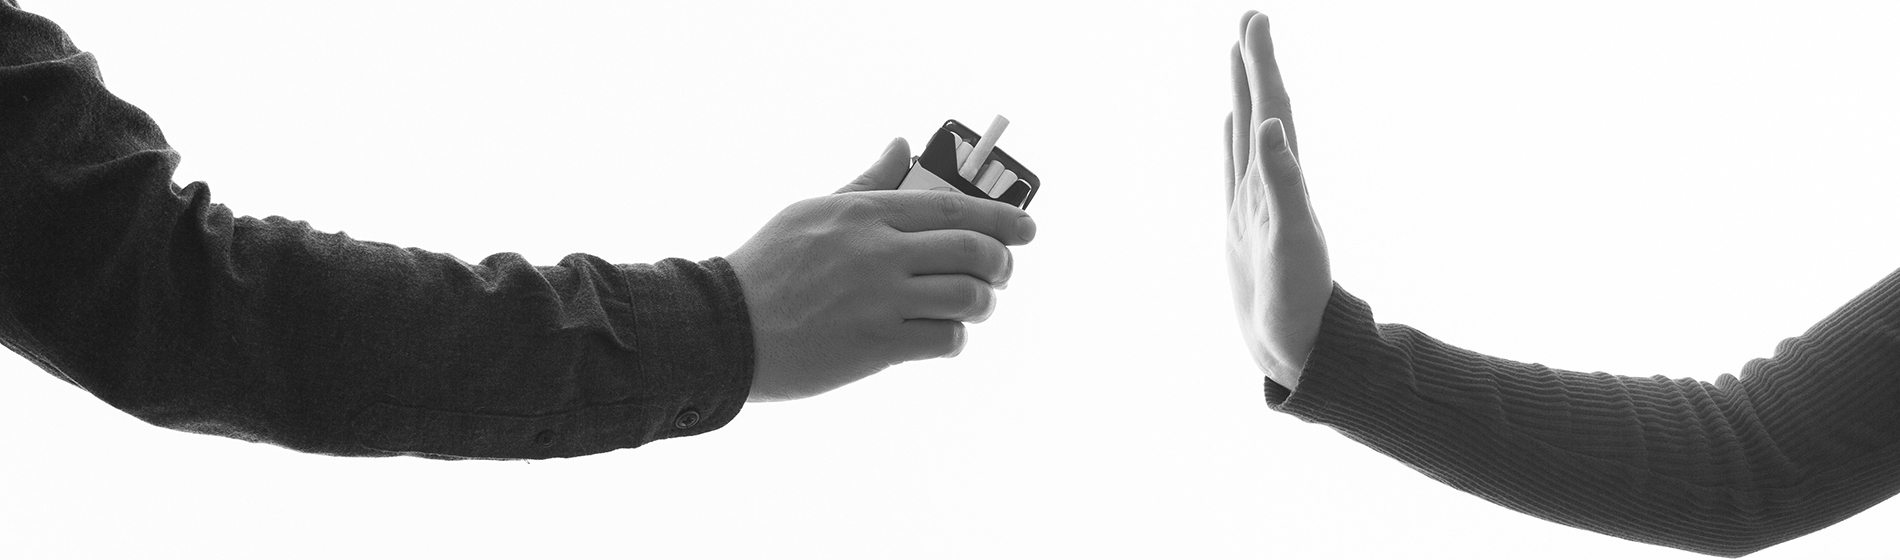 Comment arreter de fumer sans grossir